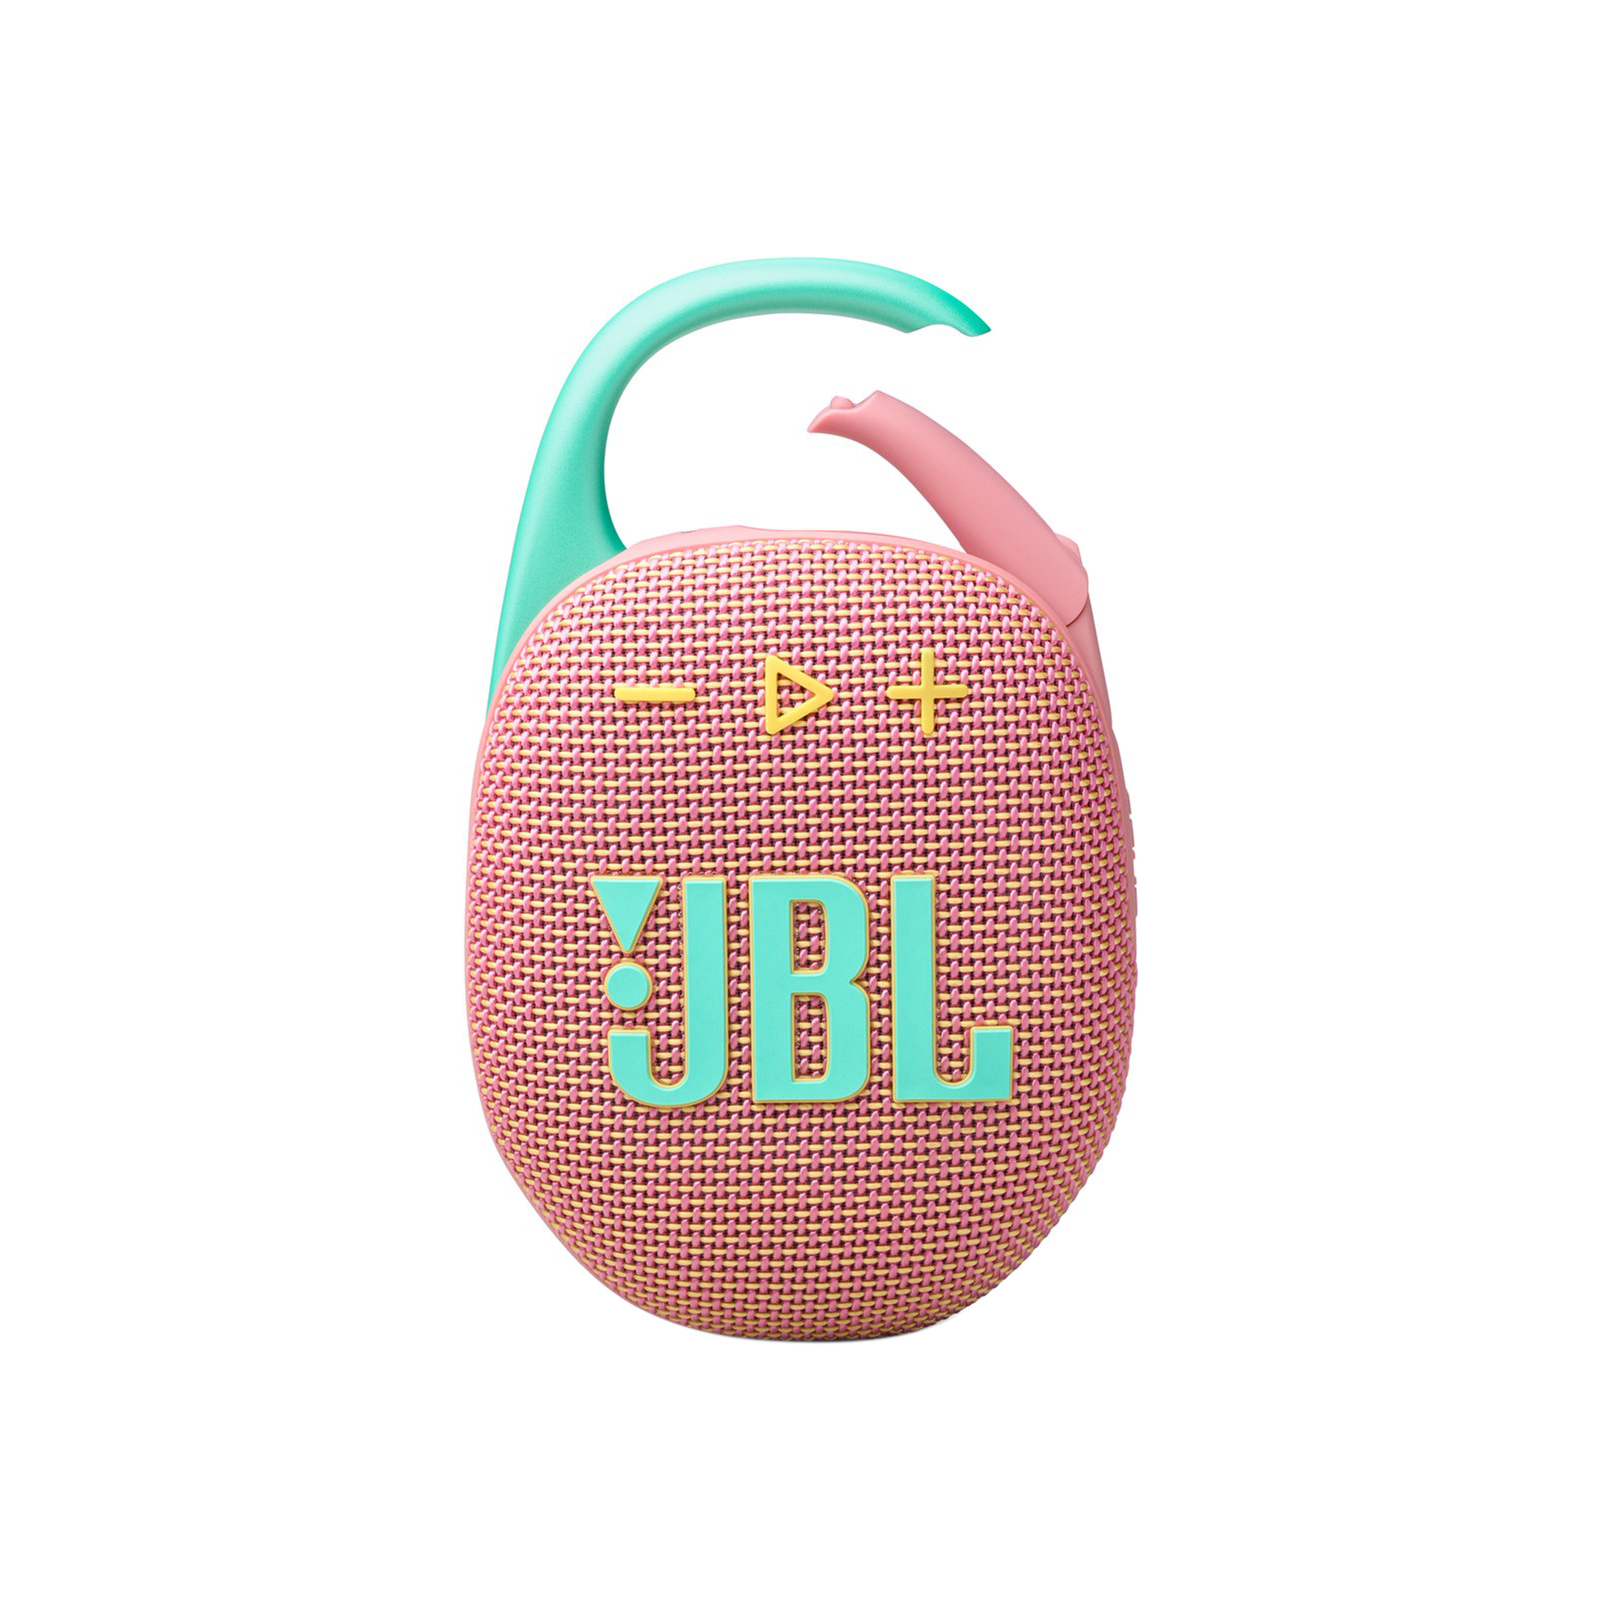 Акустическая система JBL Clip 5 Blue (JBLCLIP5BLU)